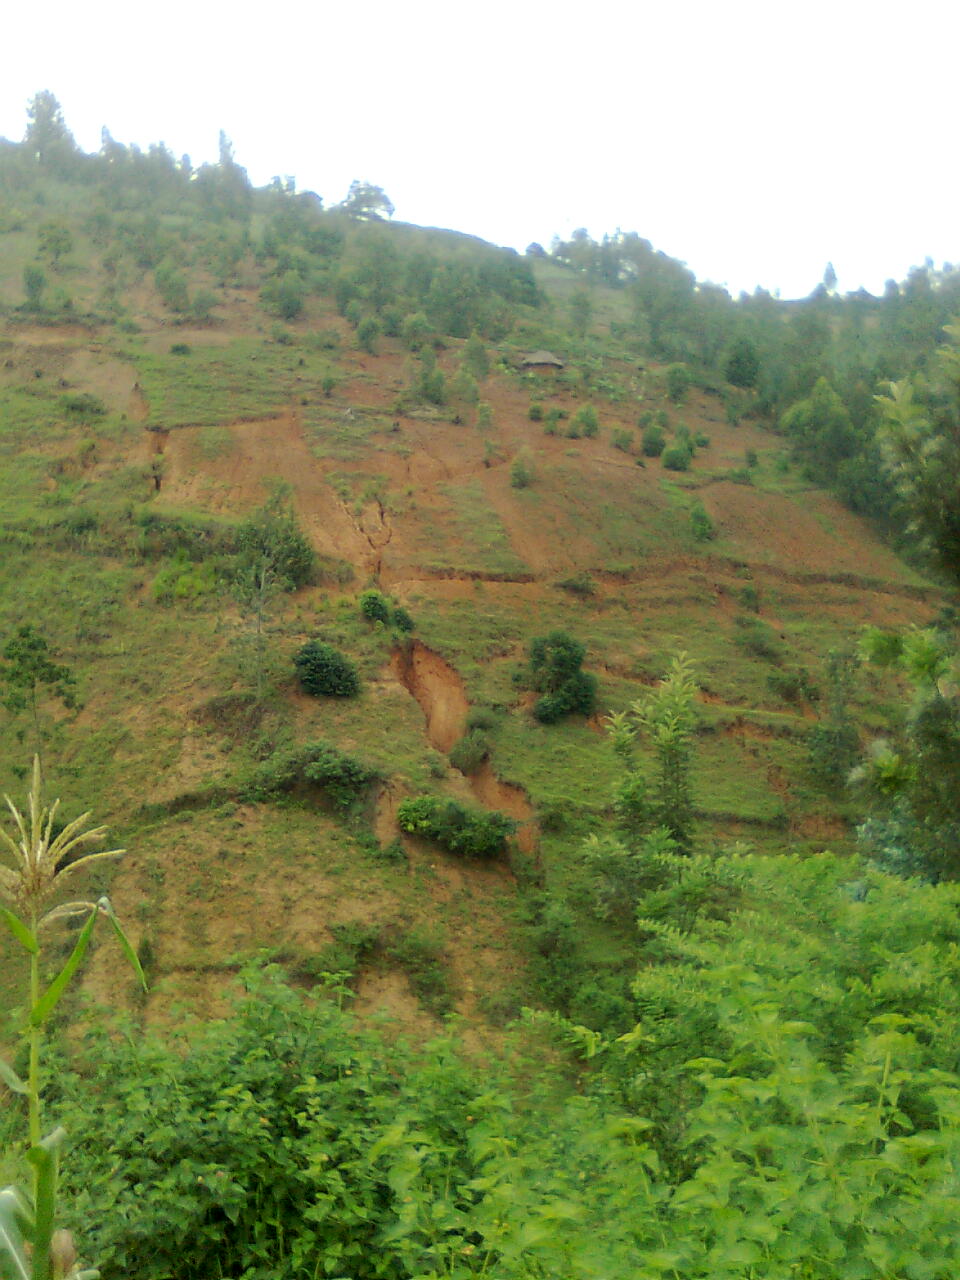 https://blogger.googleusercontent.com/img/b/R29vZ2xl/AVvXsEhD3gS2k7AXsDVkqkdLMumHyPf_86-XpbEO2vnjanGNaPEkB2g4THzEf3CQhDLY54A2iSyBf7ORc5RksV4HbNlRV7yk3RIktkwiB3LoHqQ3GbK3XQlFm0jcJ60kzT2SfYReXO_qjzvwe4o/s1600/Burundi+jan+20110119.jpg